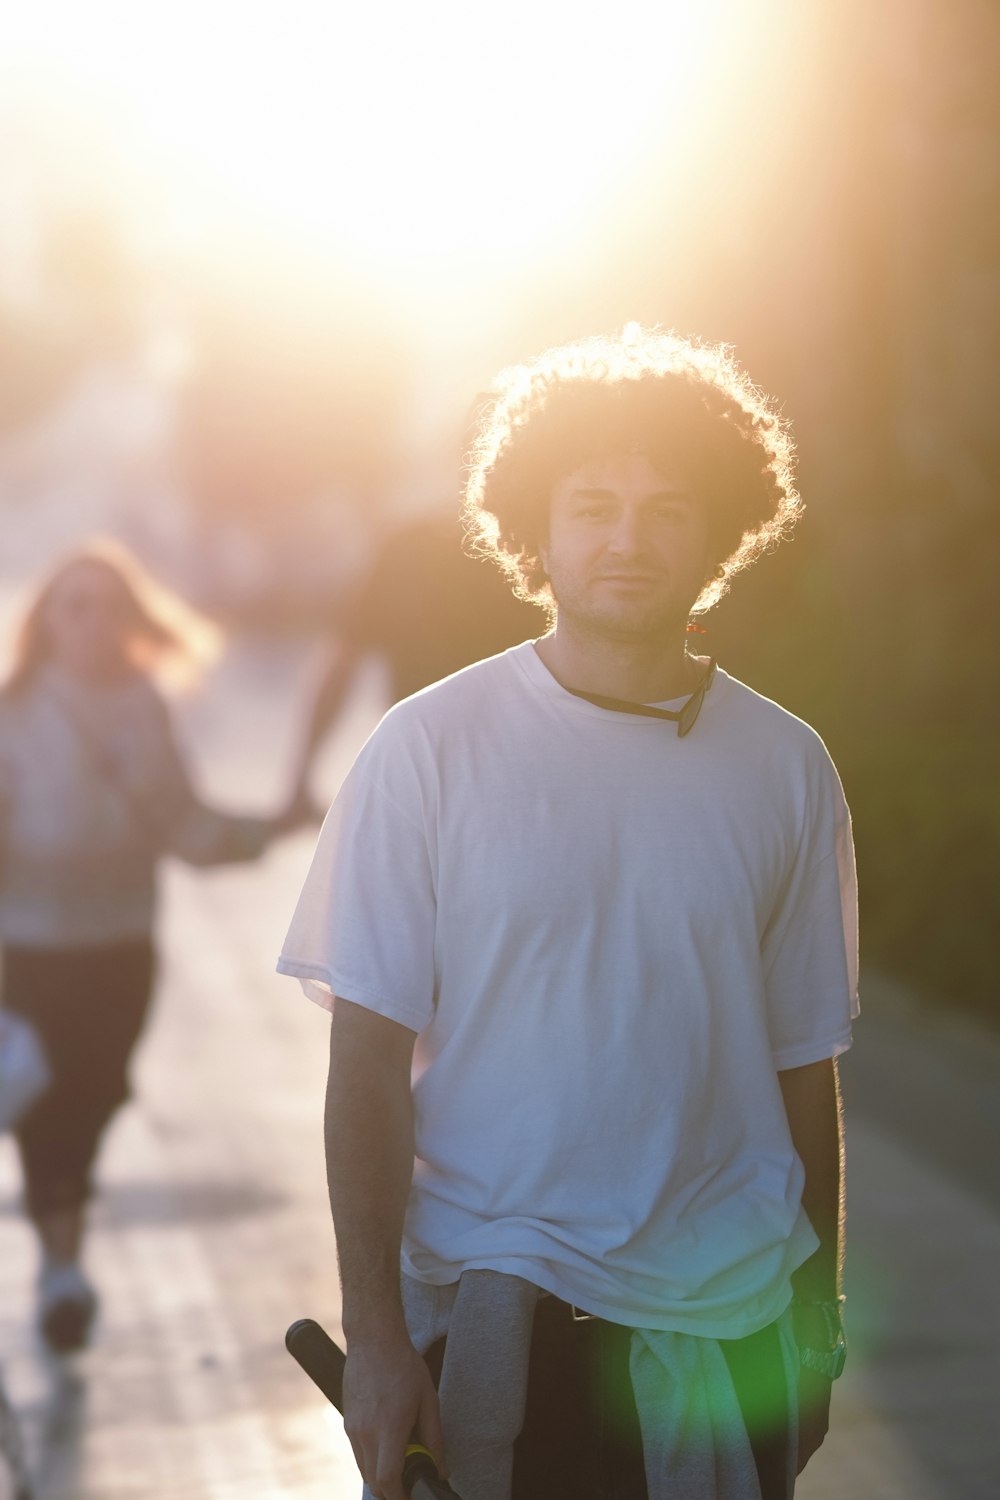 a man holding a skateboard while walking down a sidewalk